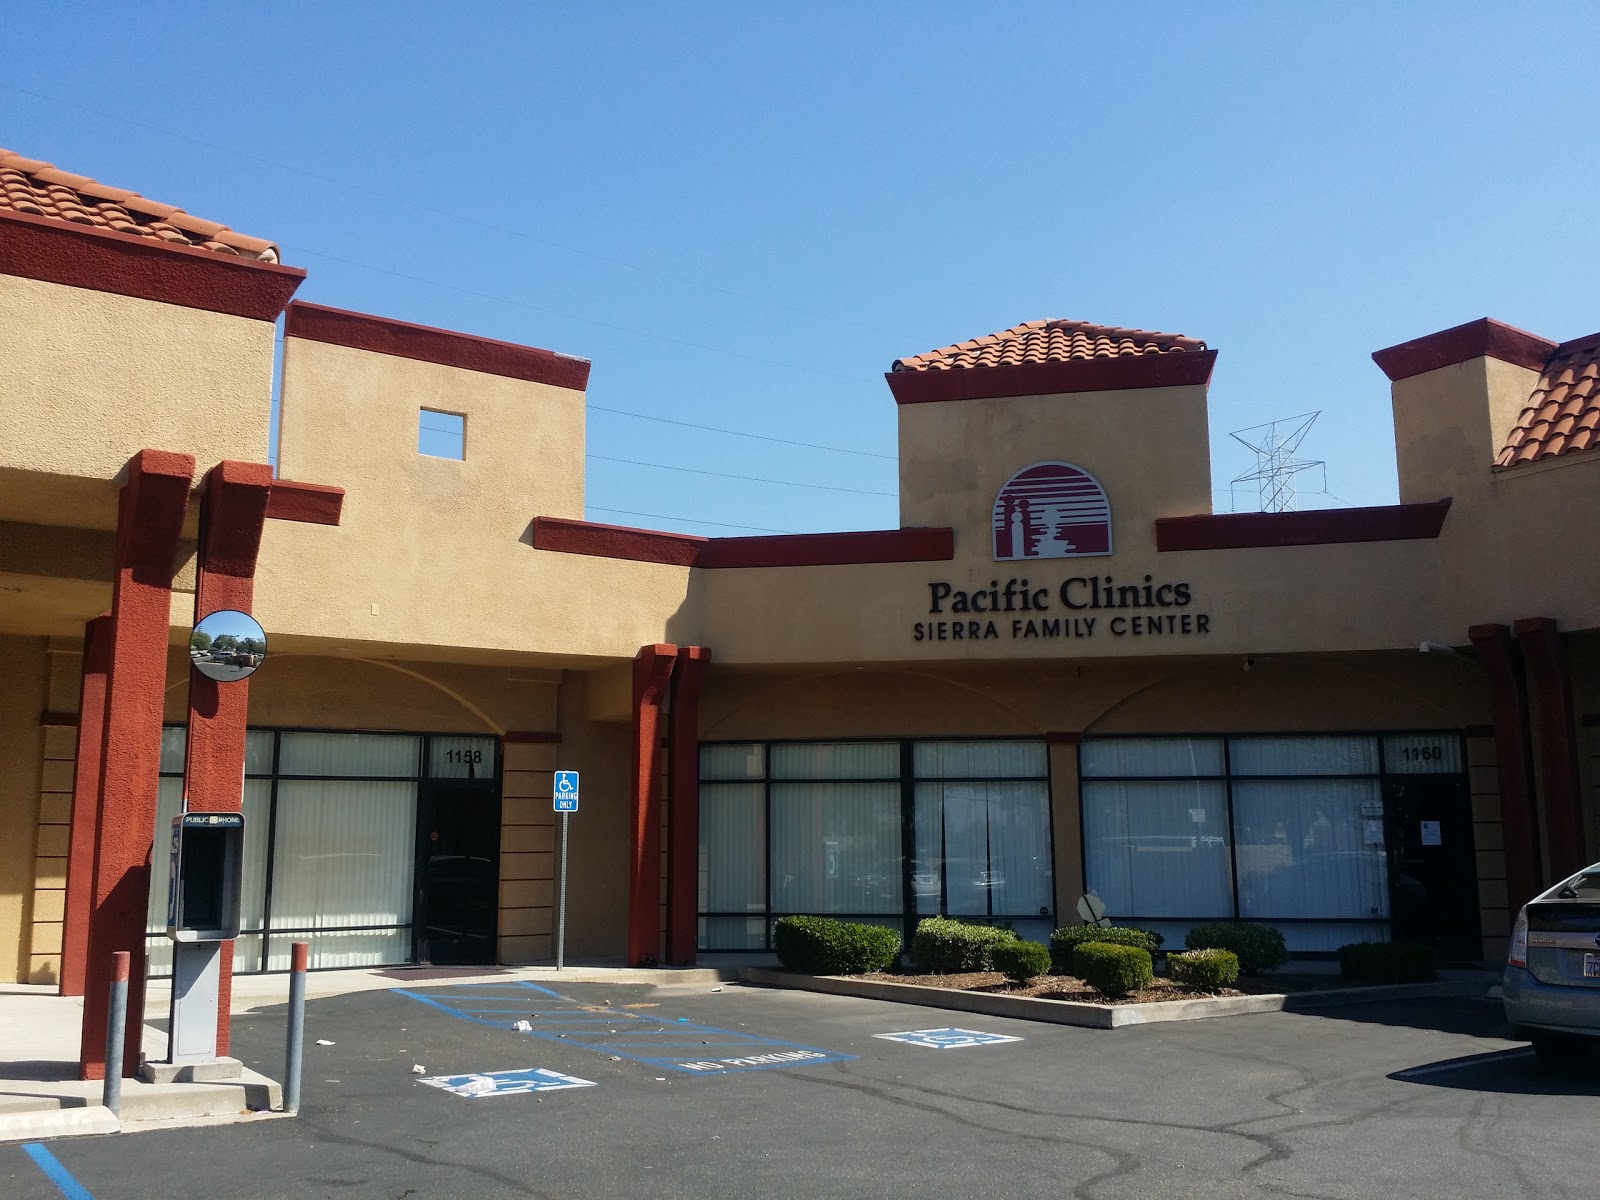 Pacific Clinics - Sierra Family Center